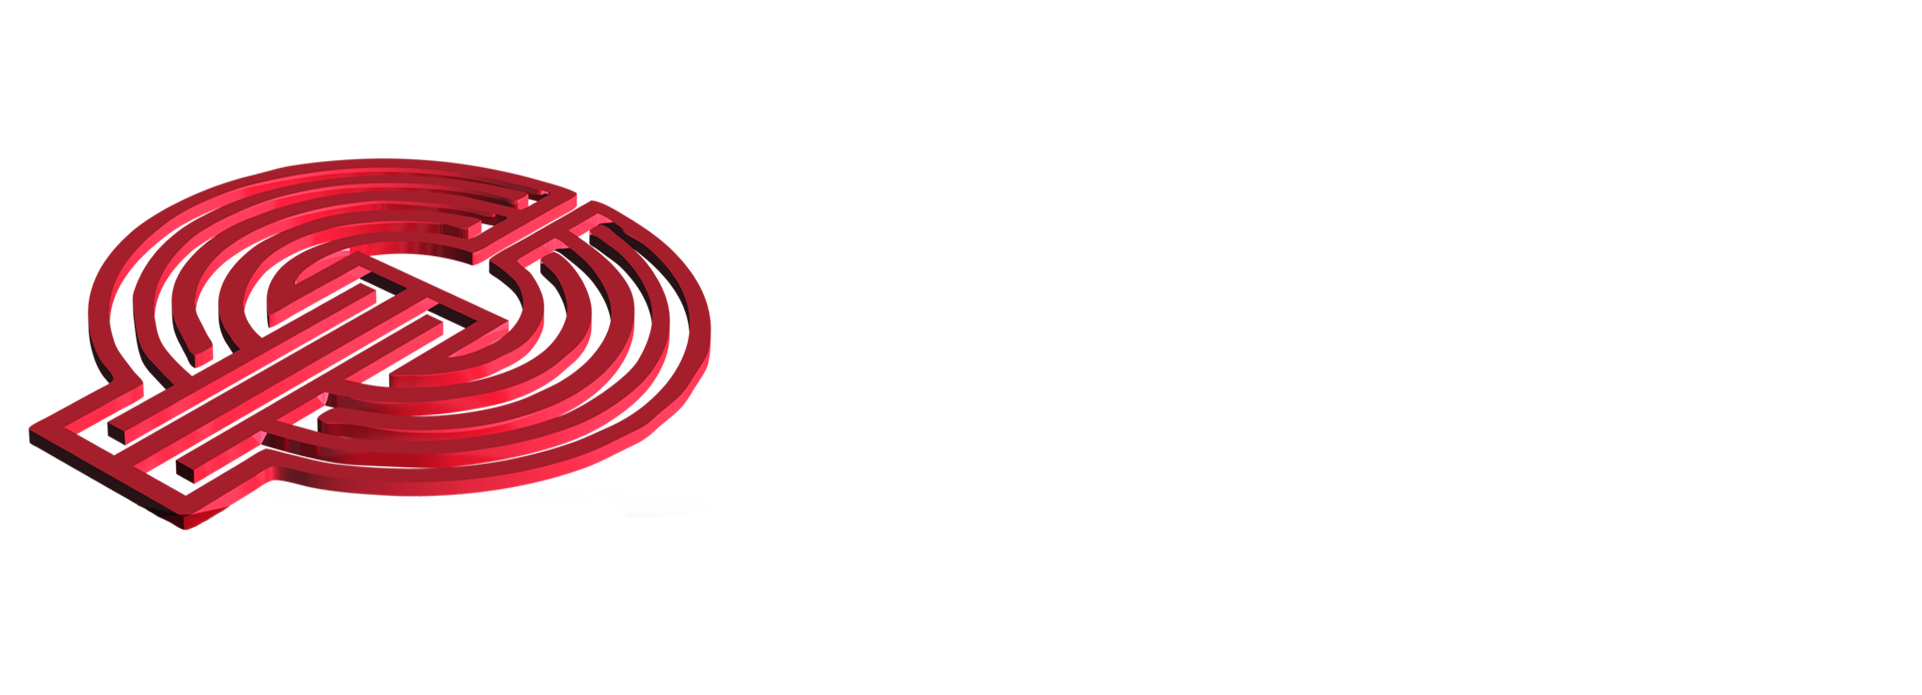 Logo Studievereniging der Psychologie Labyrint